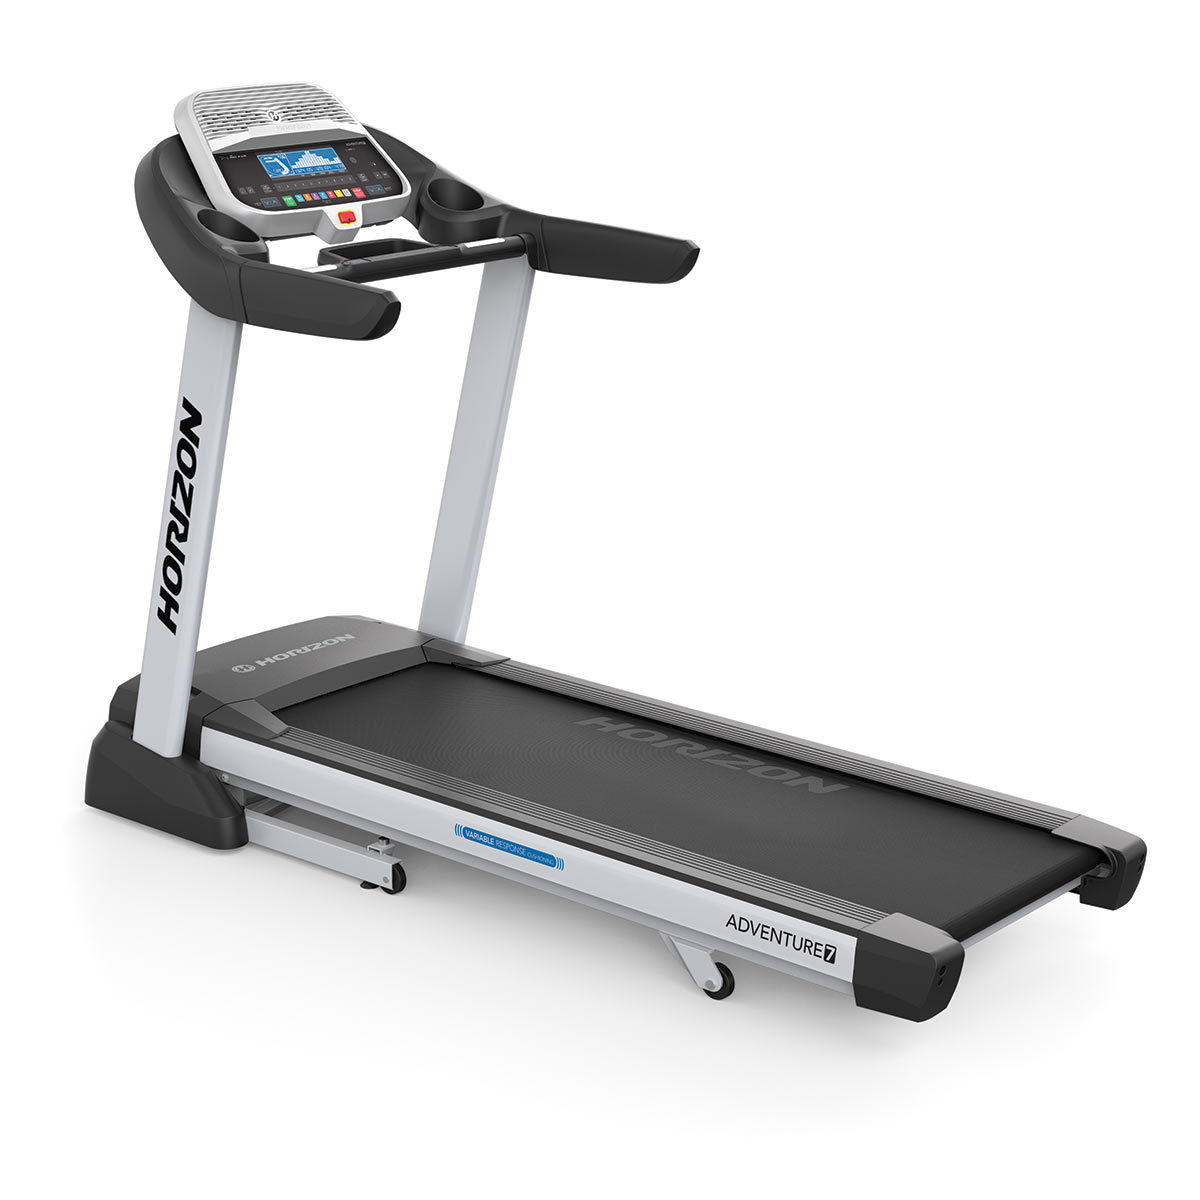 Installed Horizon Fitness Adventure 7 Viewfit Treadmill Costco Uk